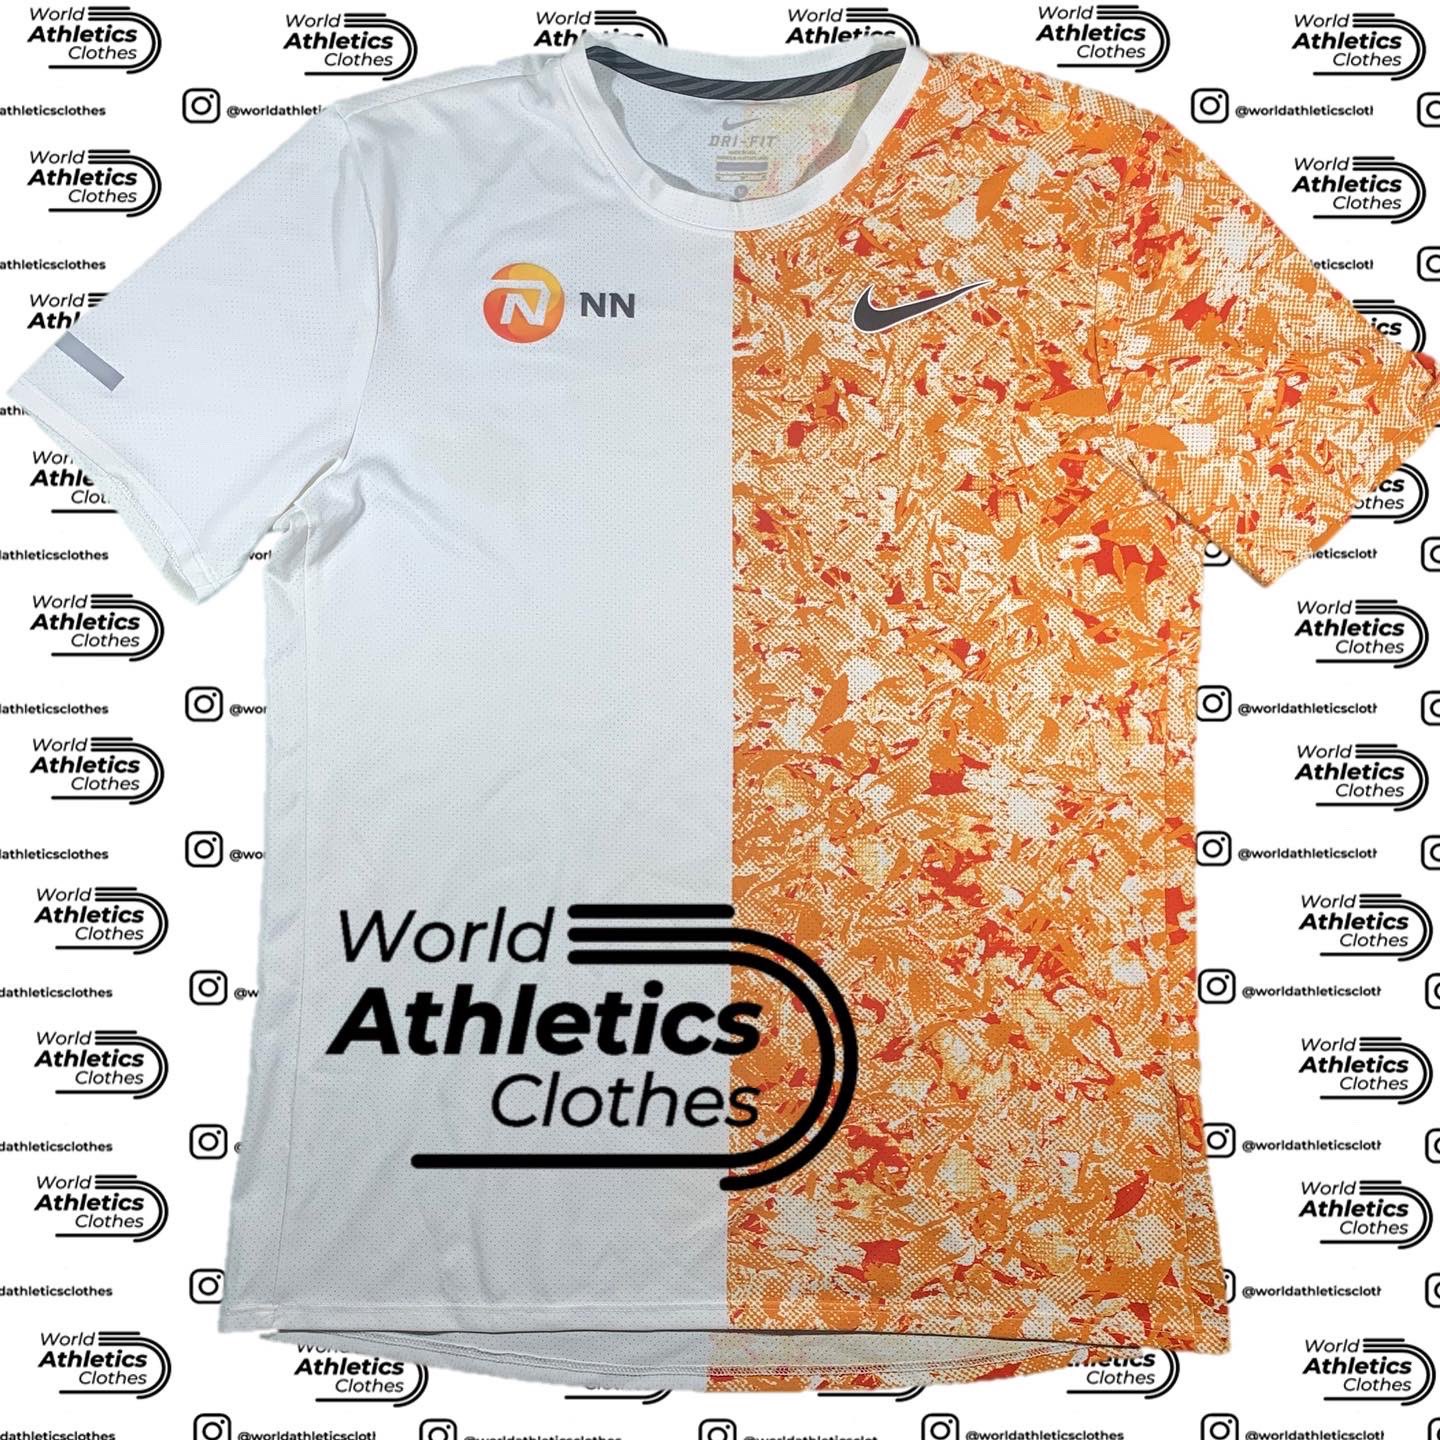 World Athletics Clothes on X: 